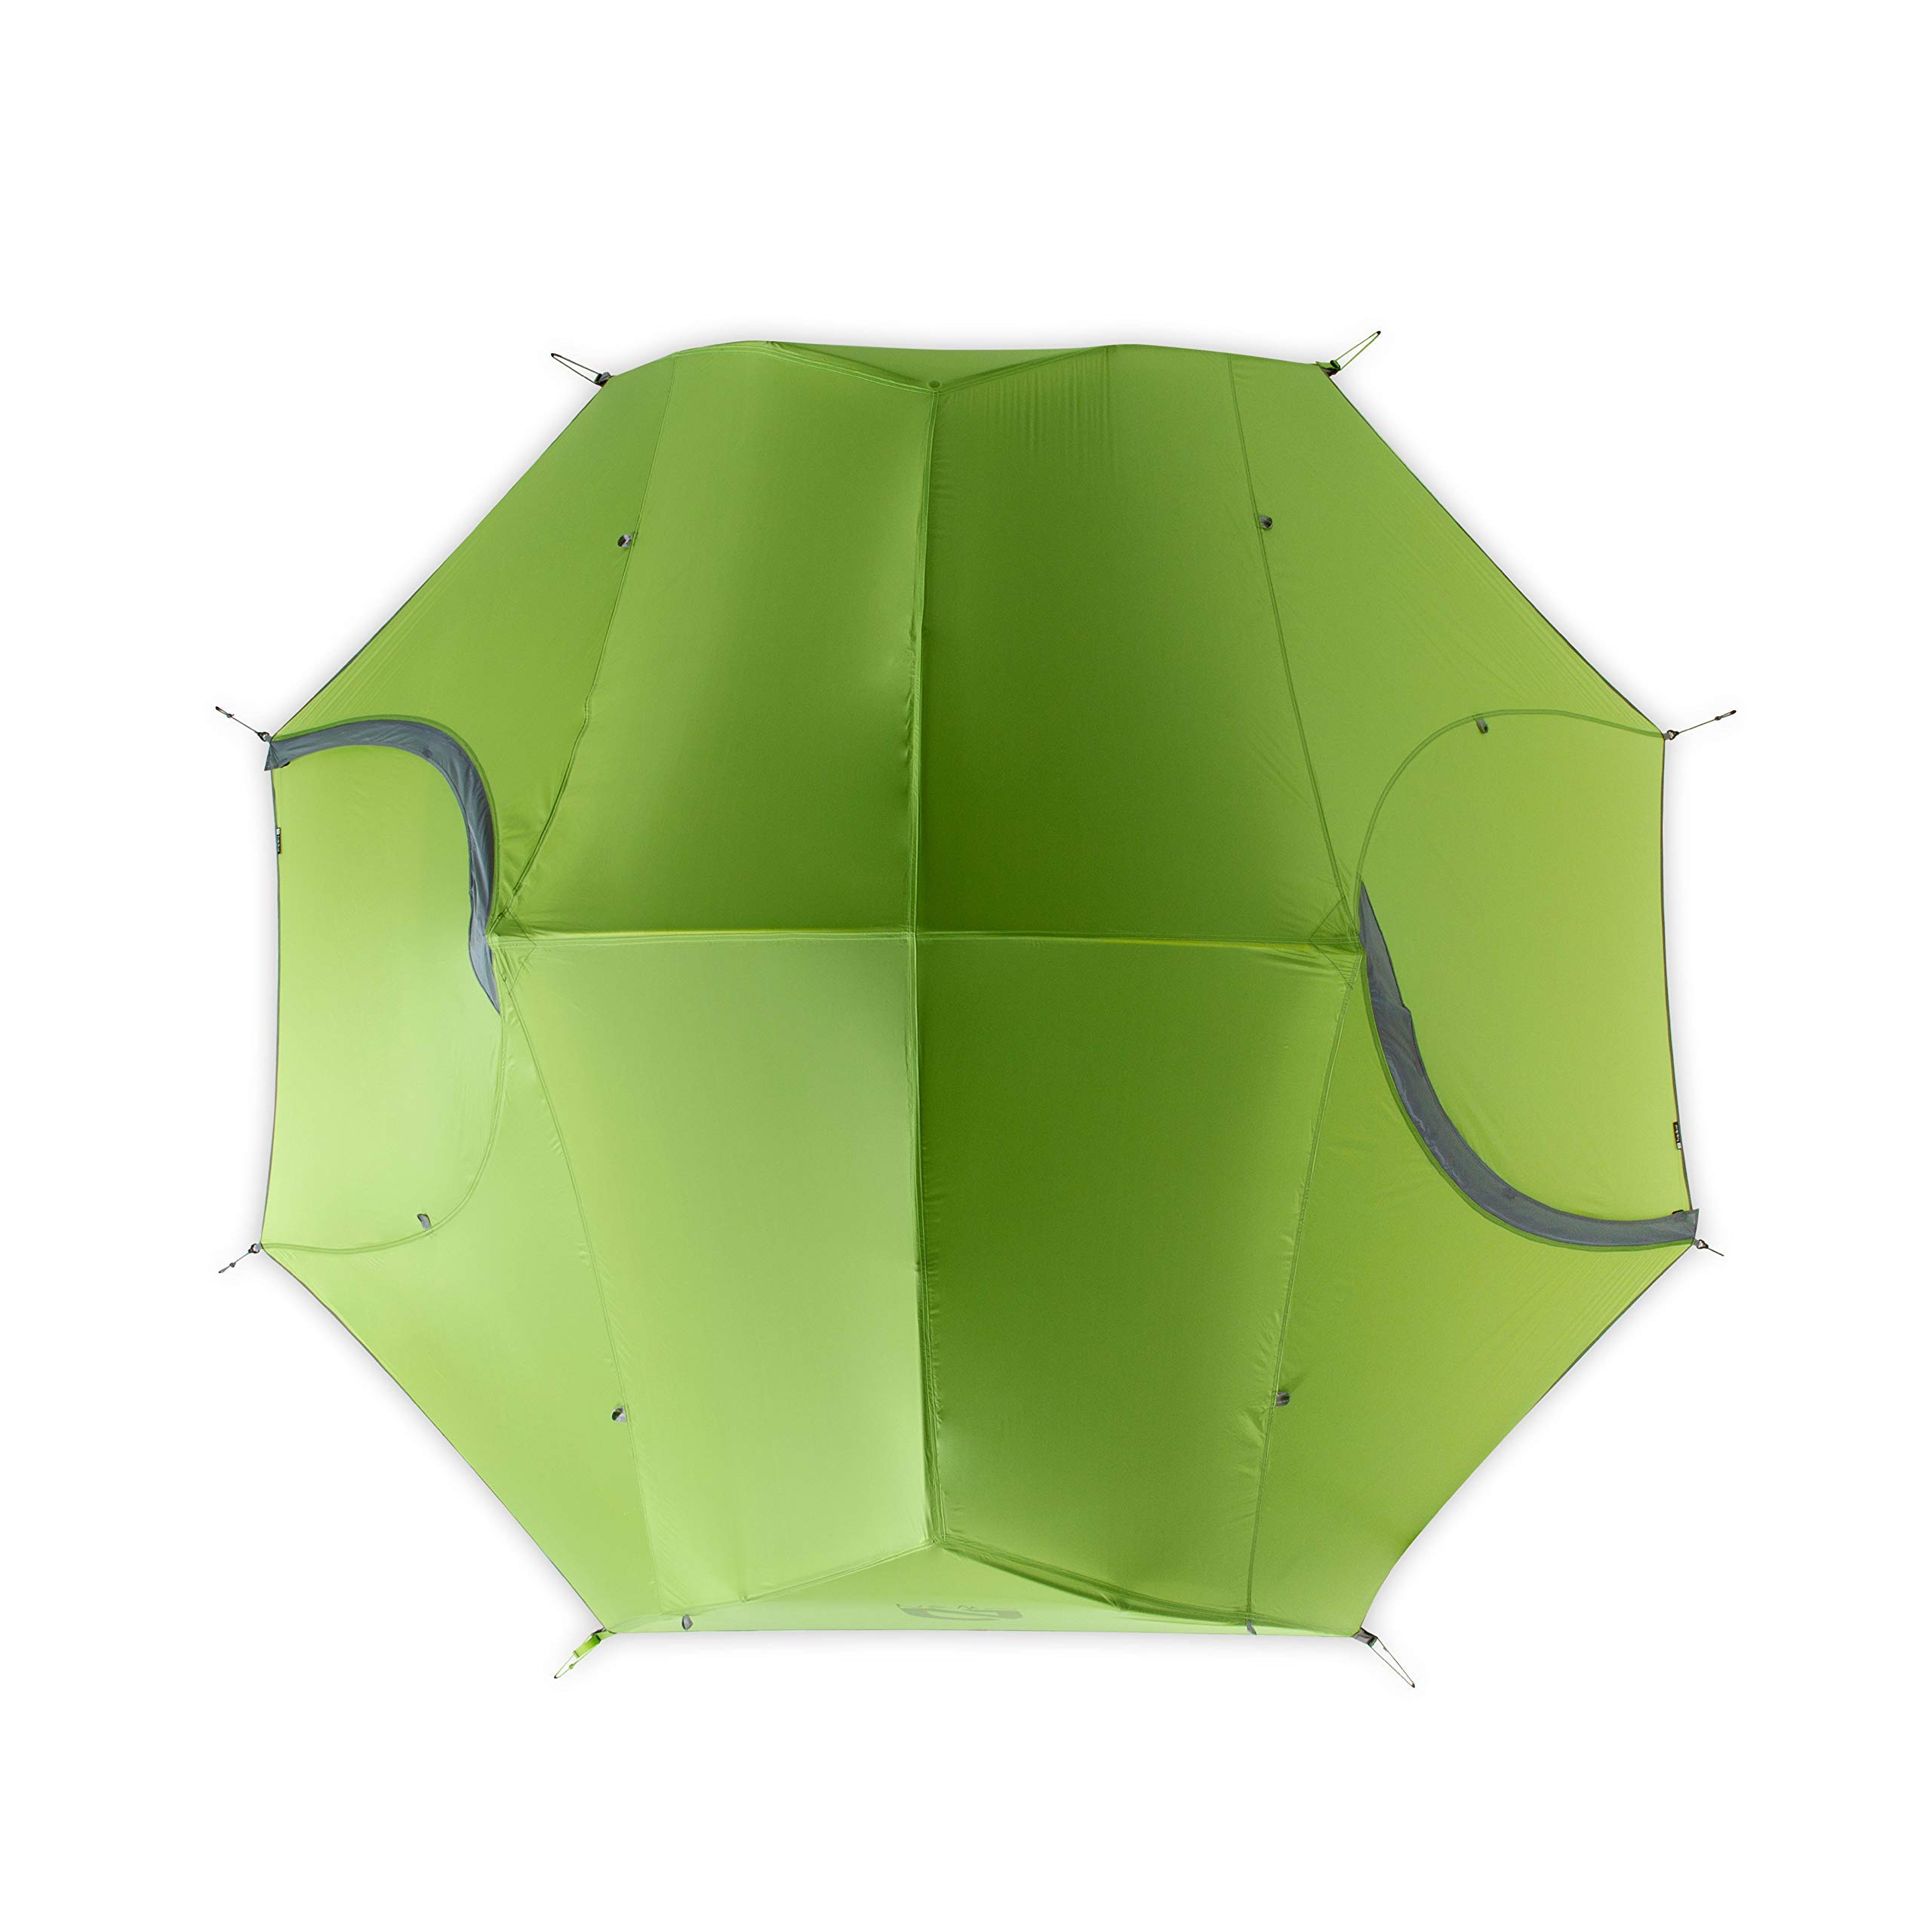 Nemo Dagger Ultralight Backpacking Tent, Birch Leaf Green, 2 Person